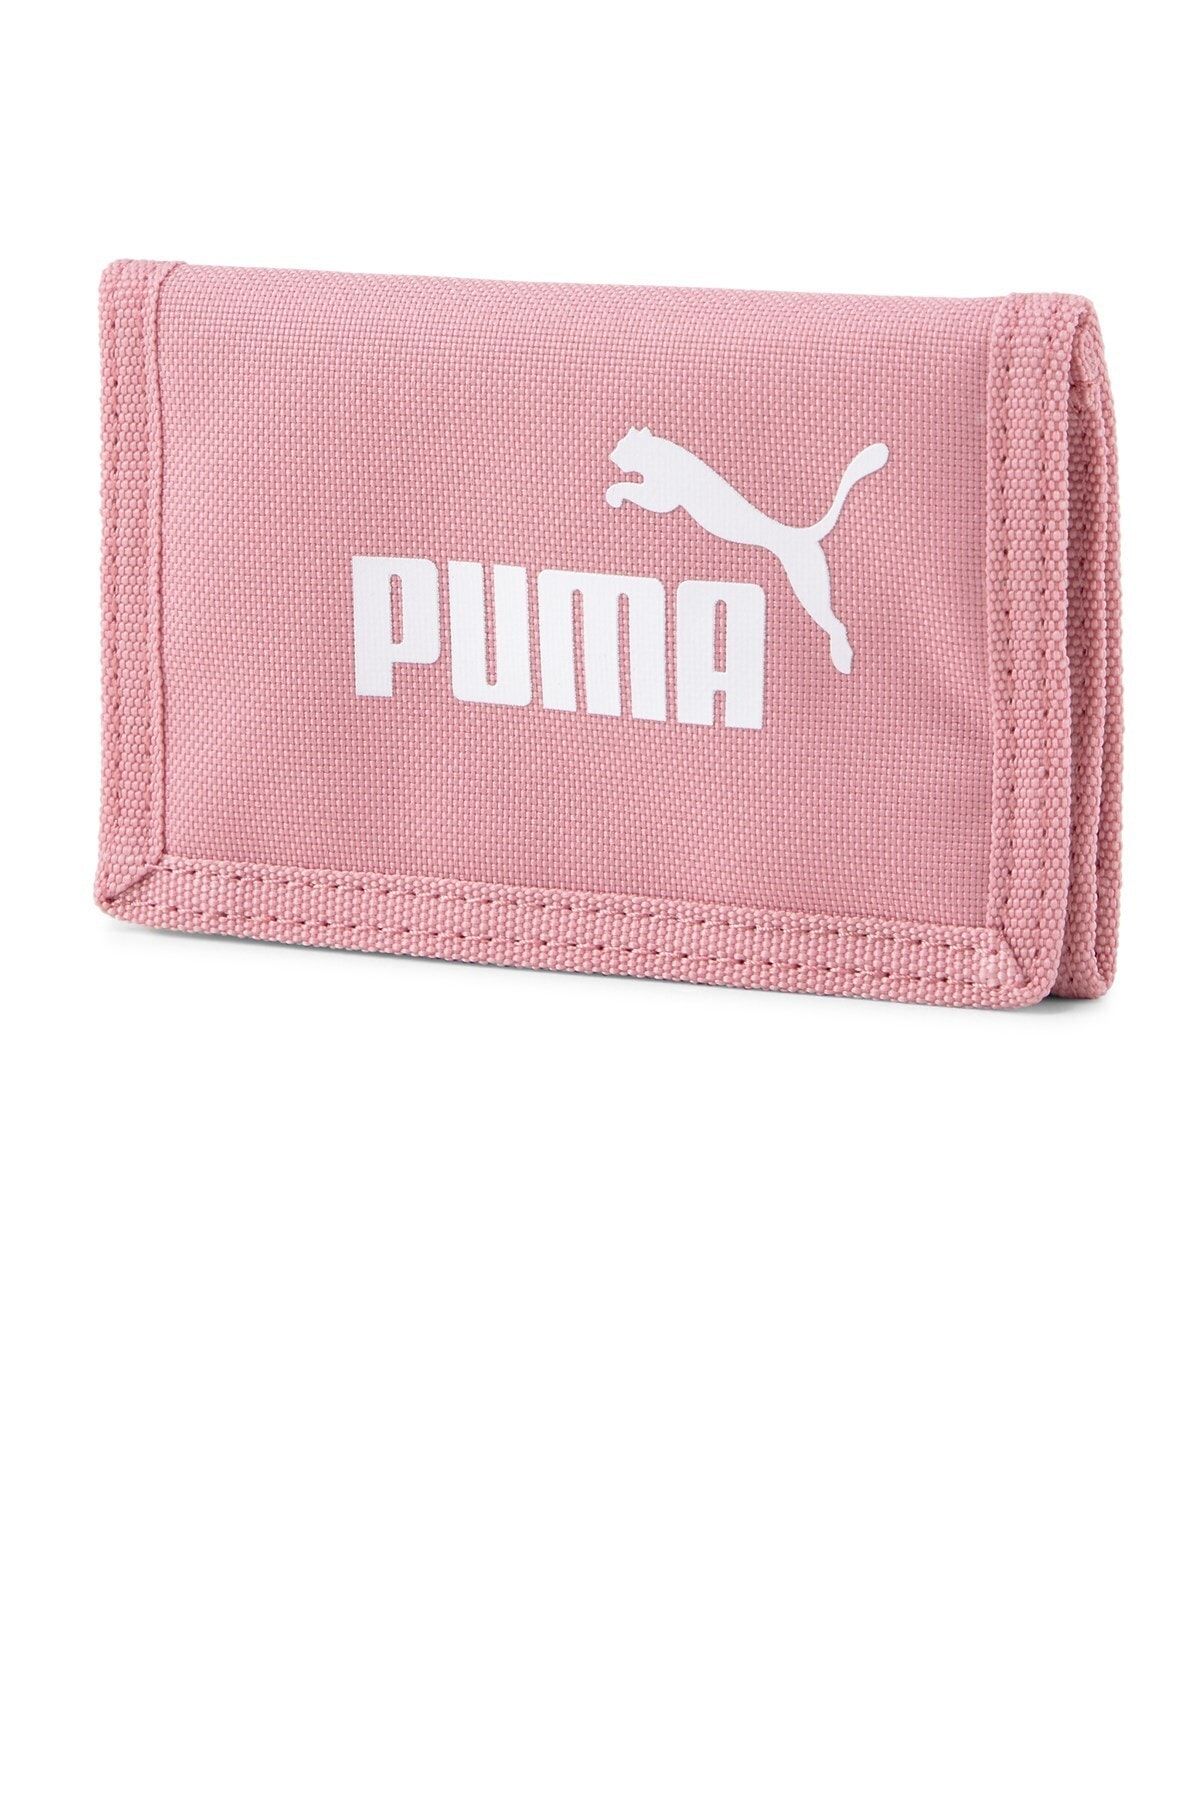 Puma Phase Wallet Unisex Pembe Cüzdan 07561744